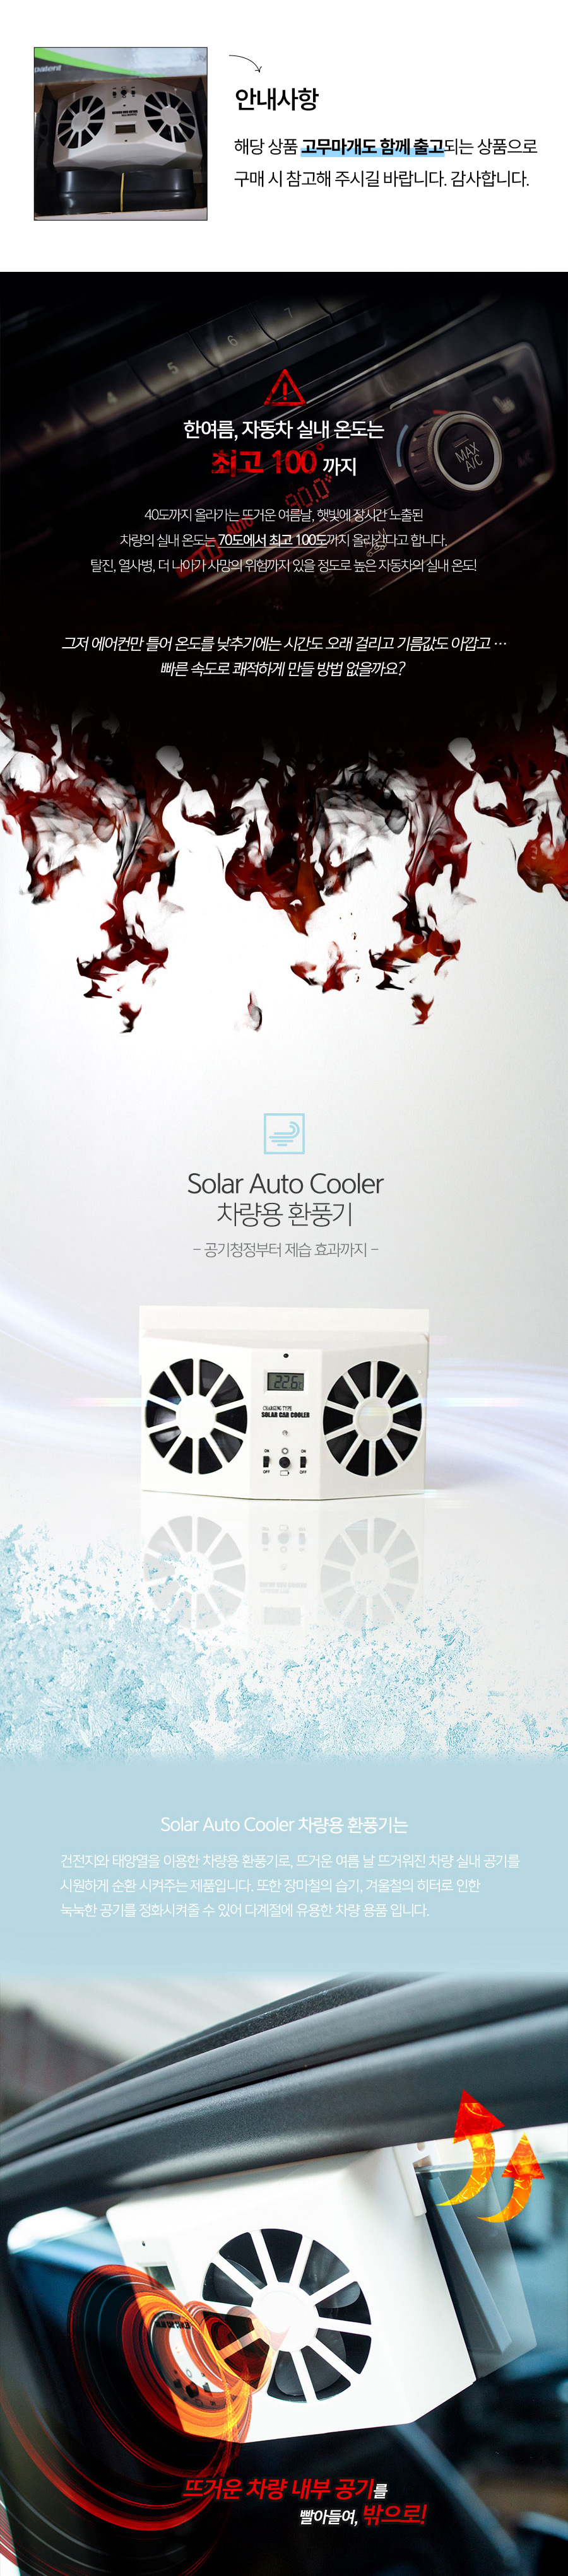 Solar Auto Cooler 차량용 환풍기